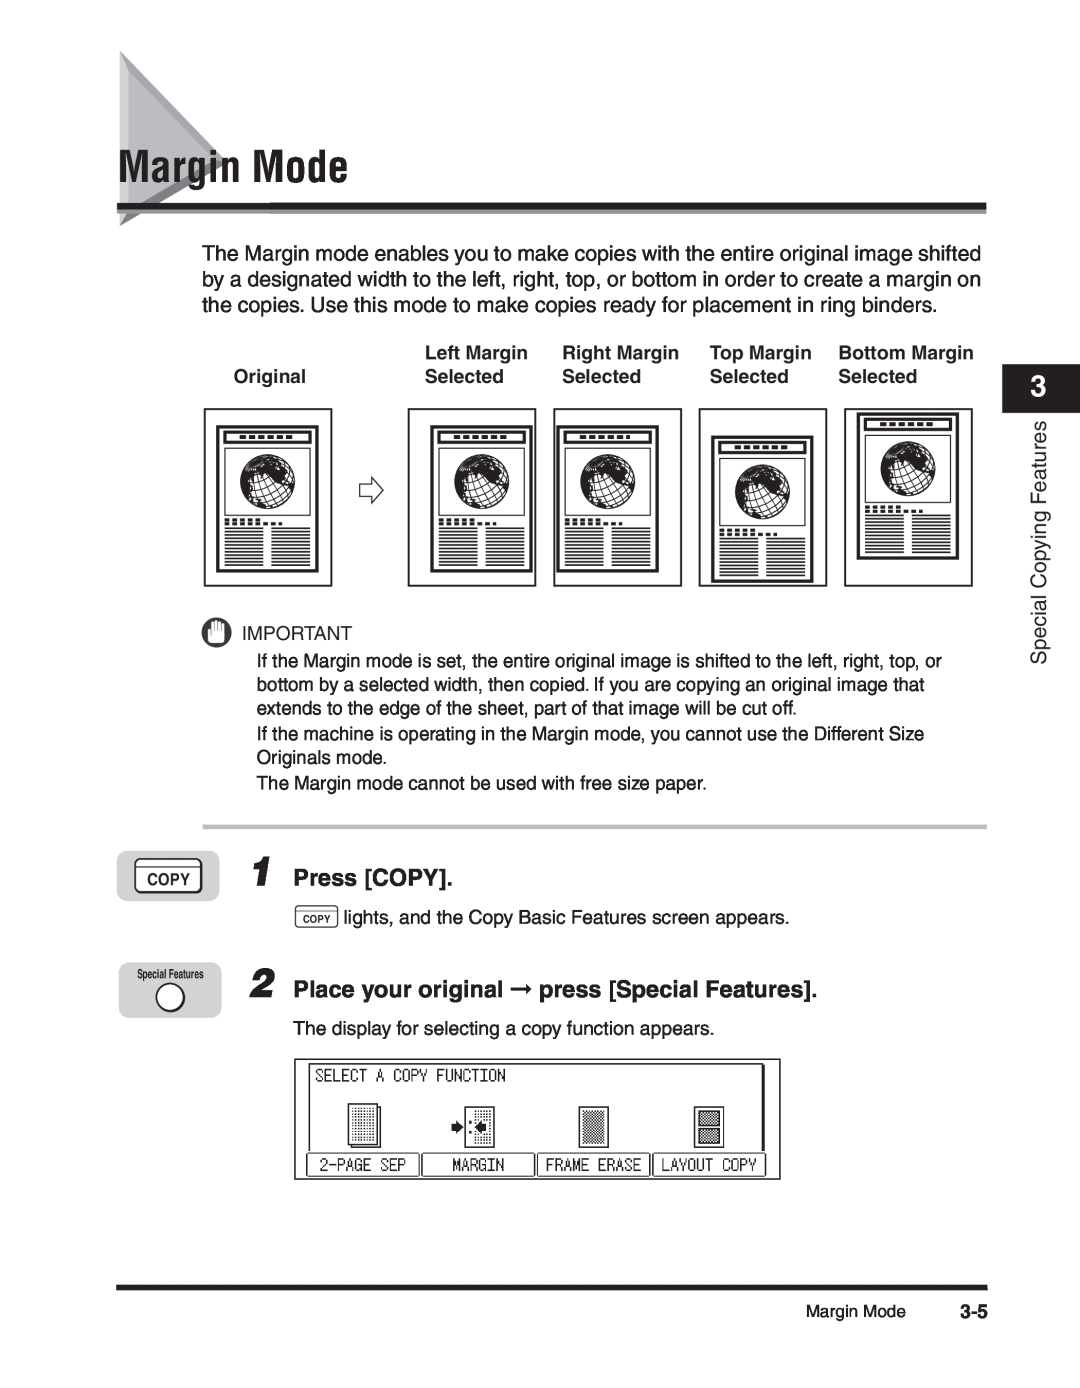 Canon 2300 manual Margin Mode, Place your original press Special Features, COPY 1 Press COPY, Copying Features 